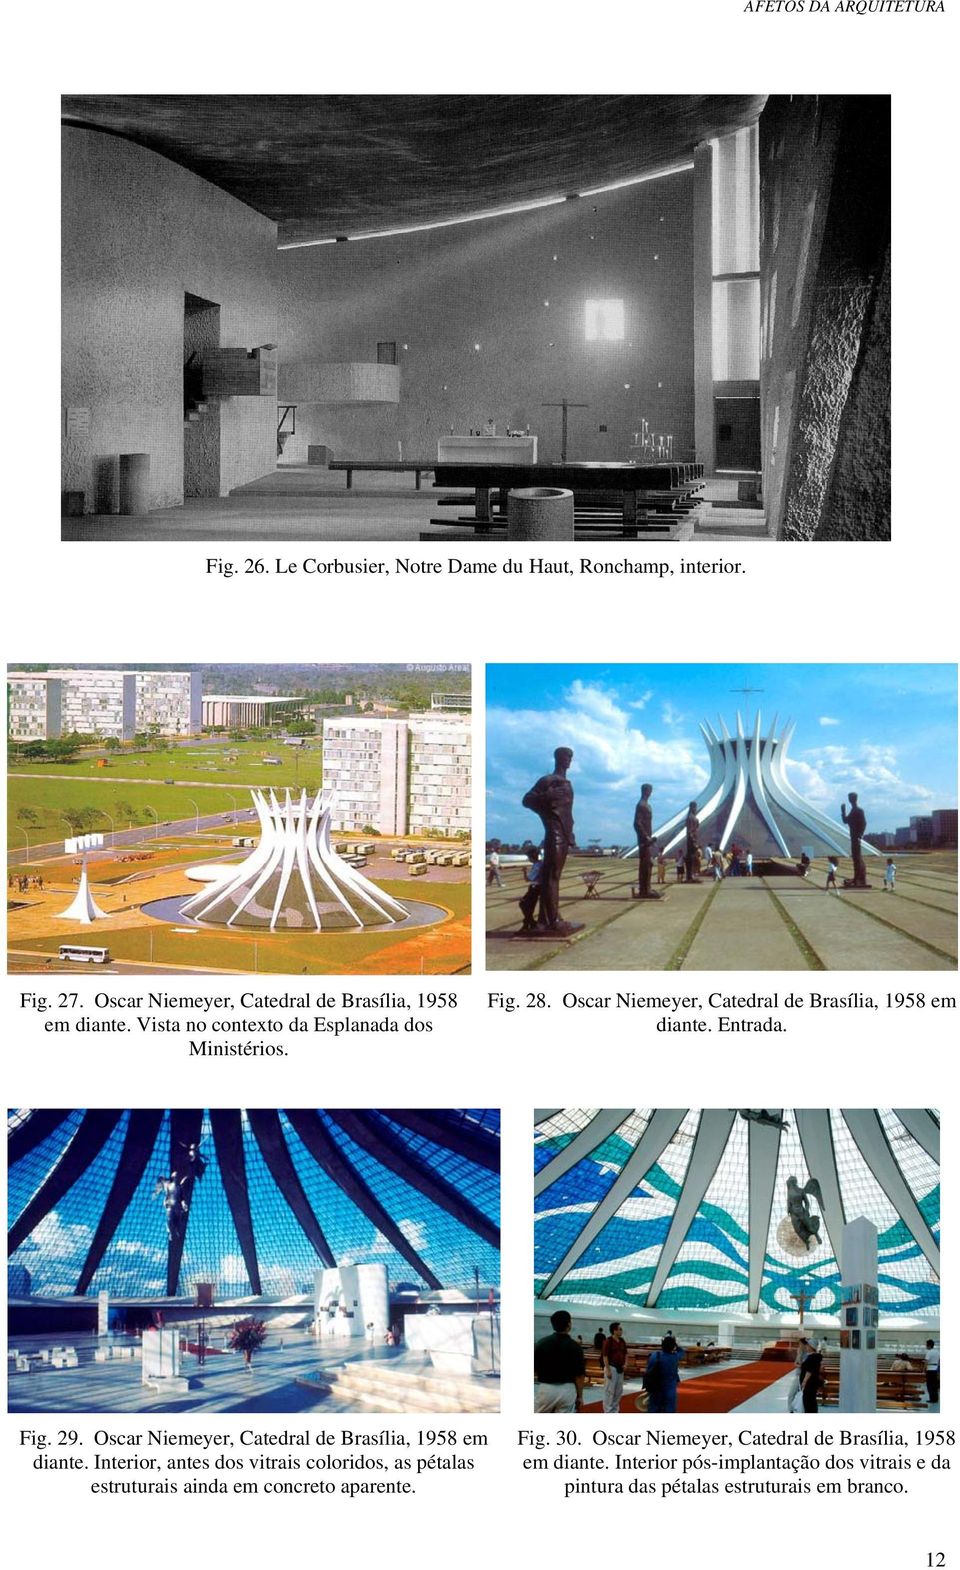 Oscar Niemeyer, Catedral de Brasília, 1958 em diante.